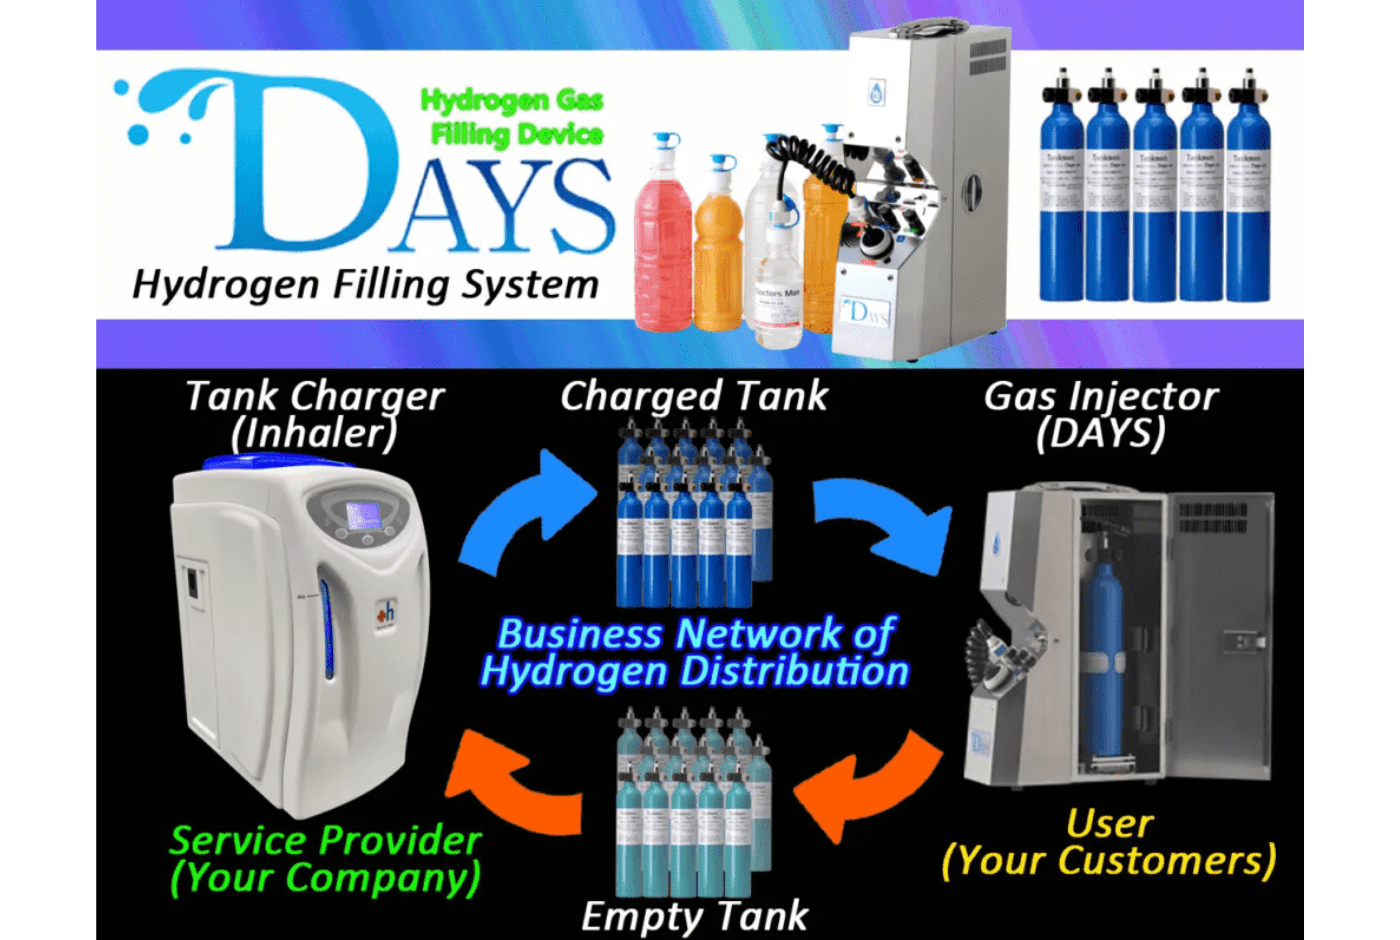 Hydrogen Gas injector